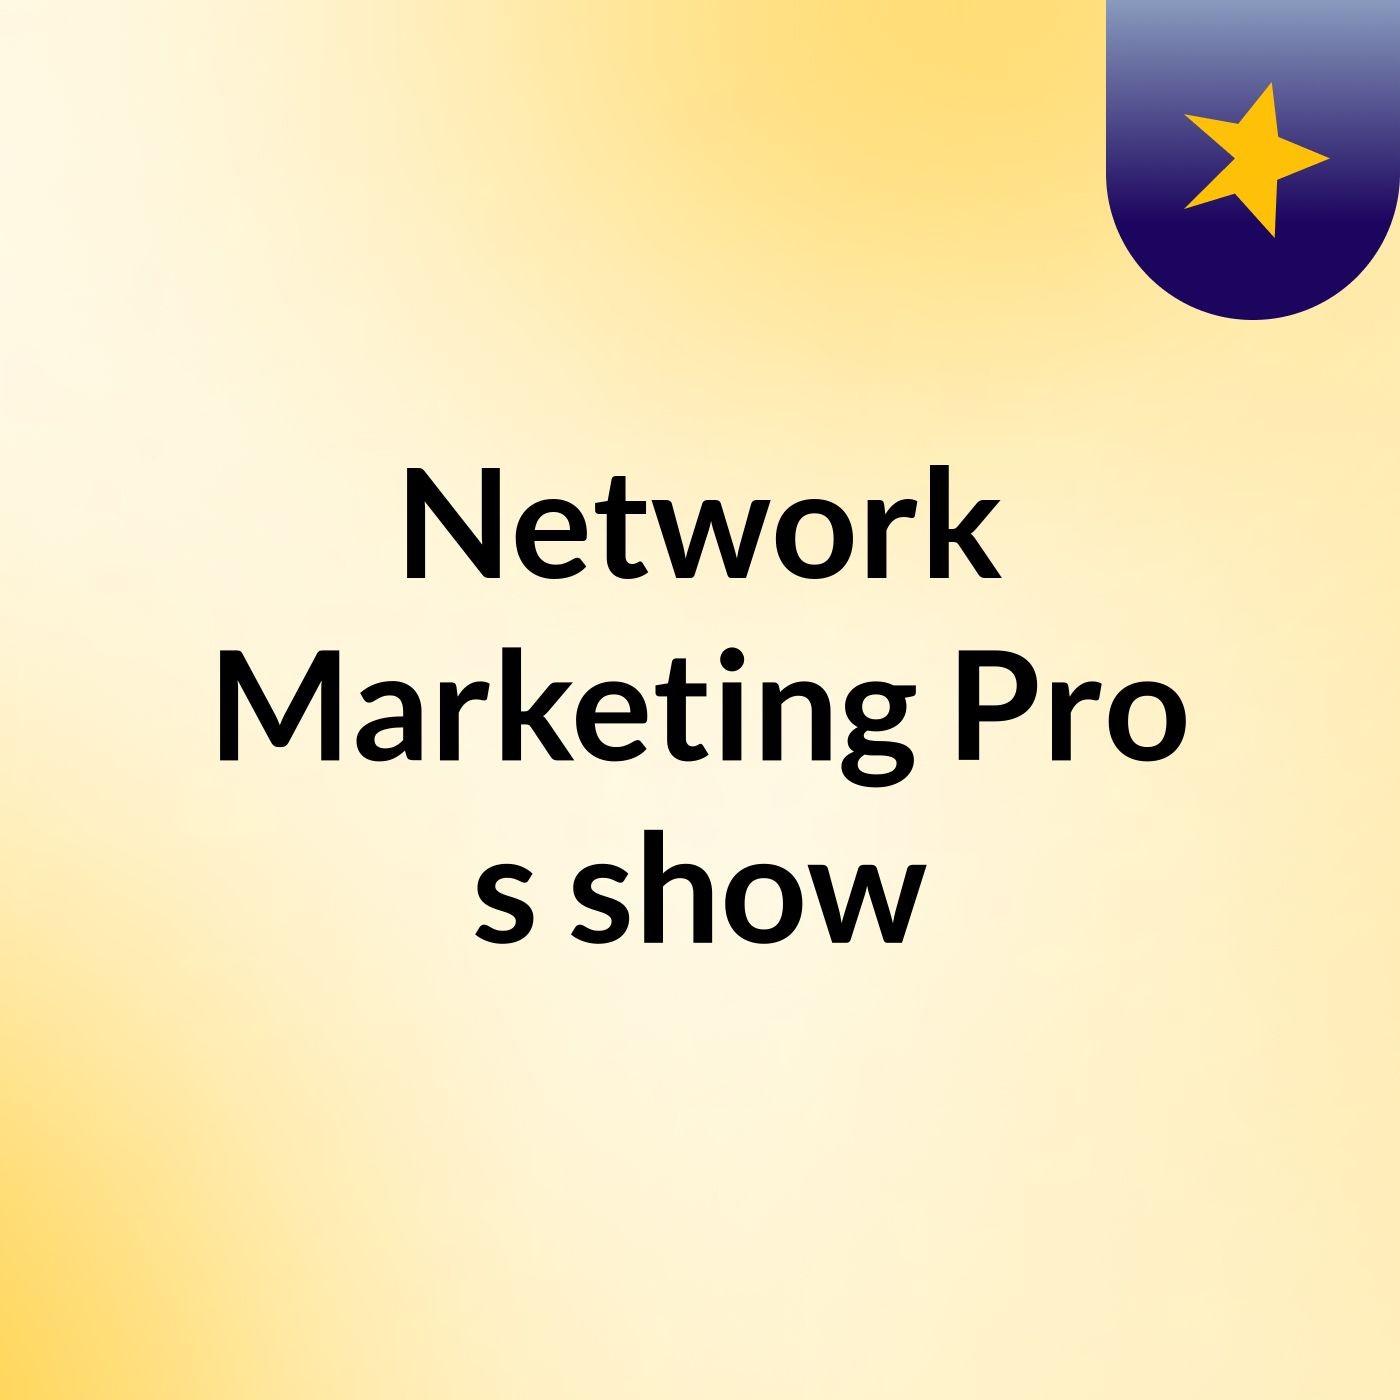 Network Marketing Pro's show